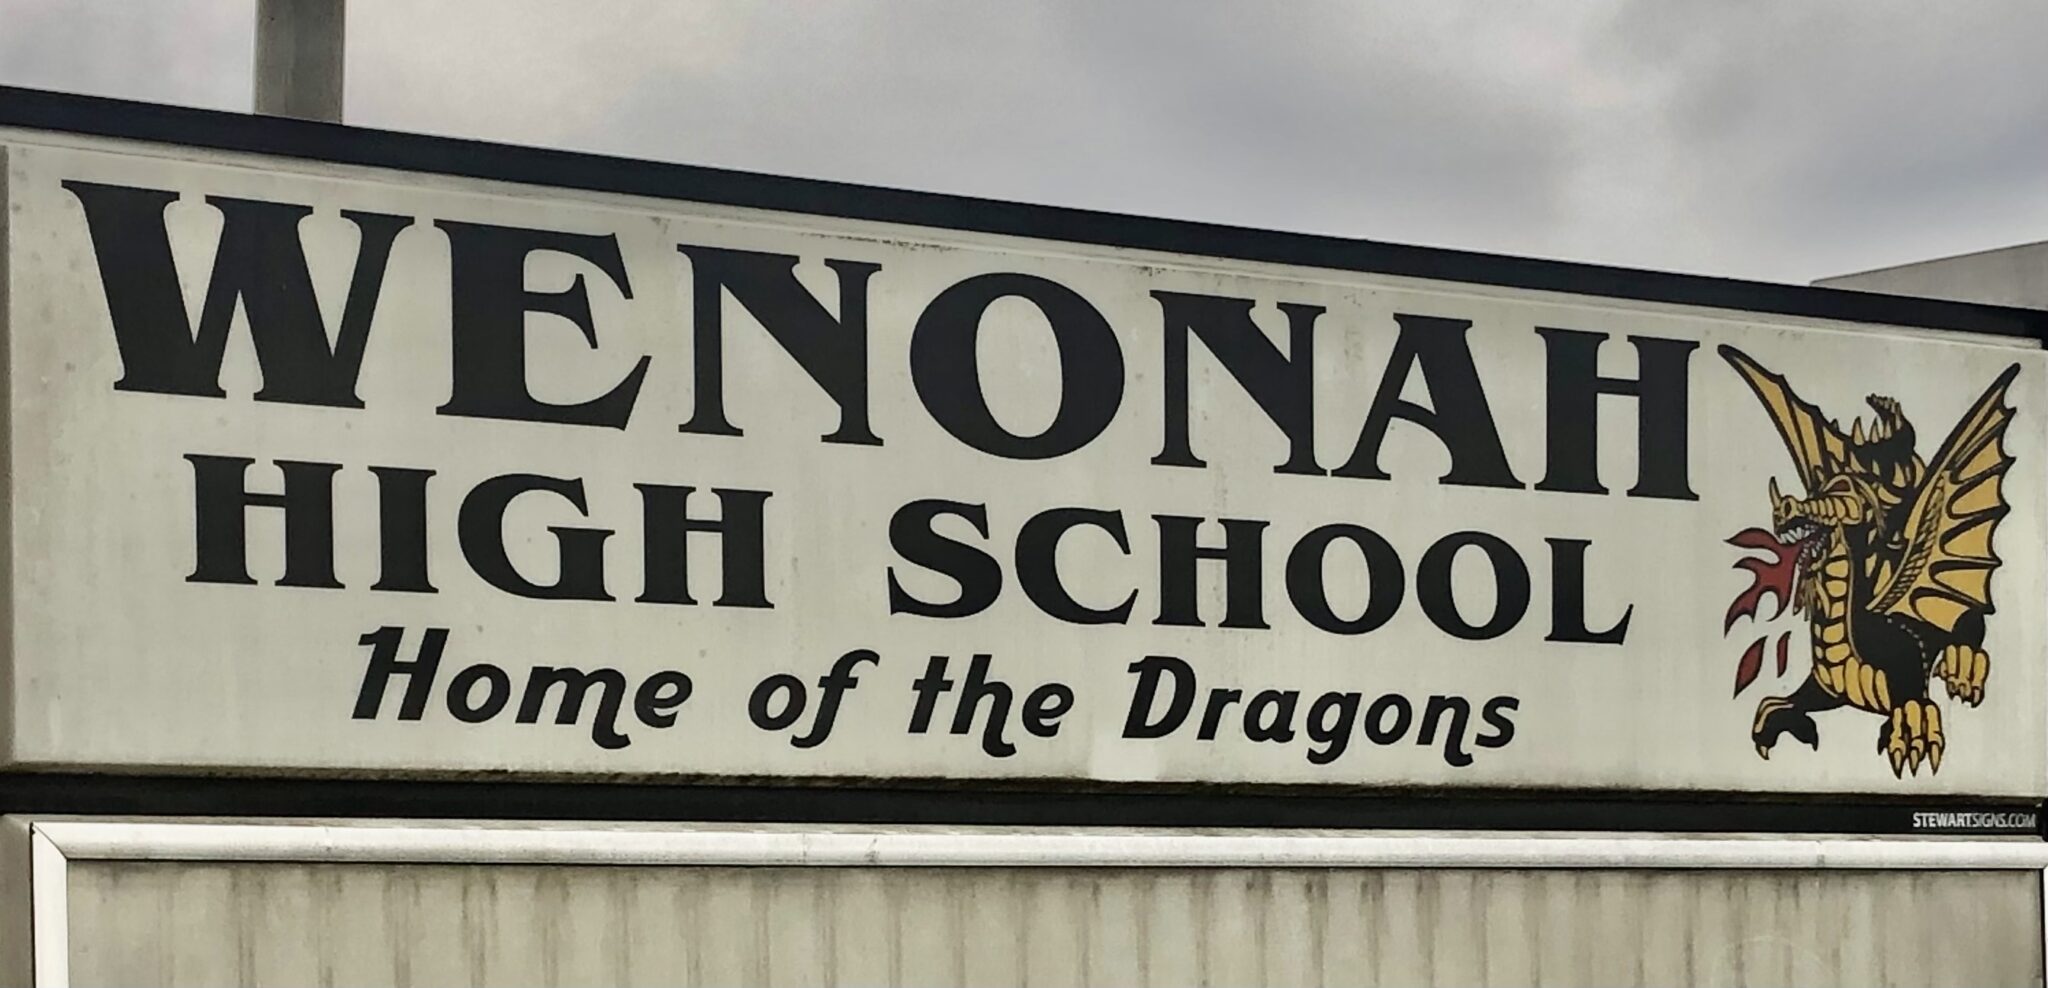 Wenonah High School